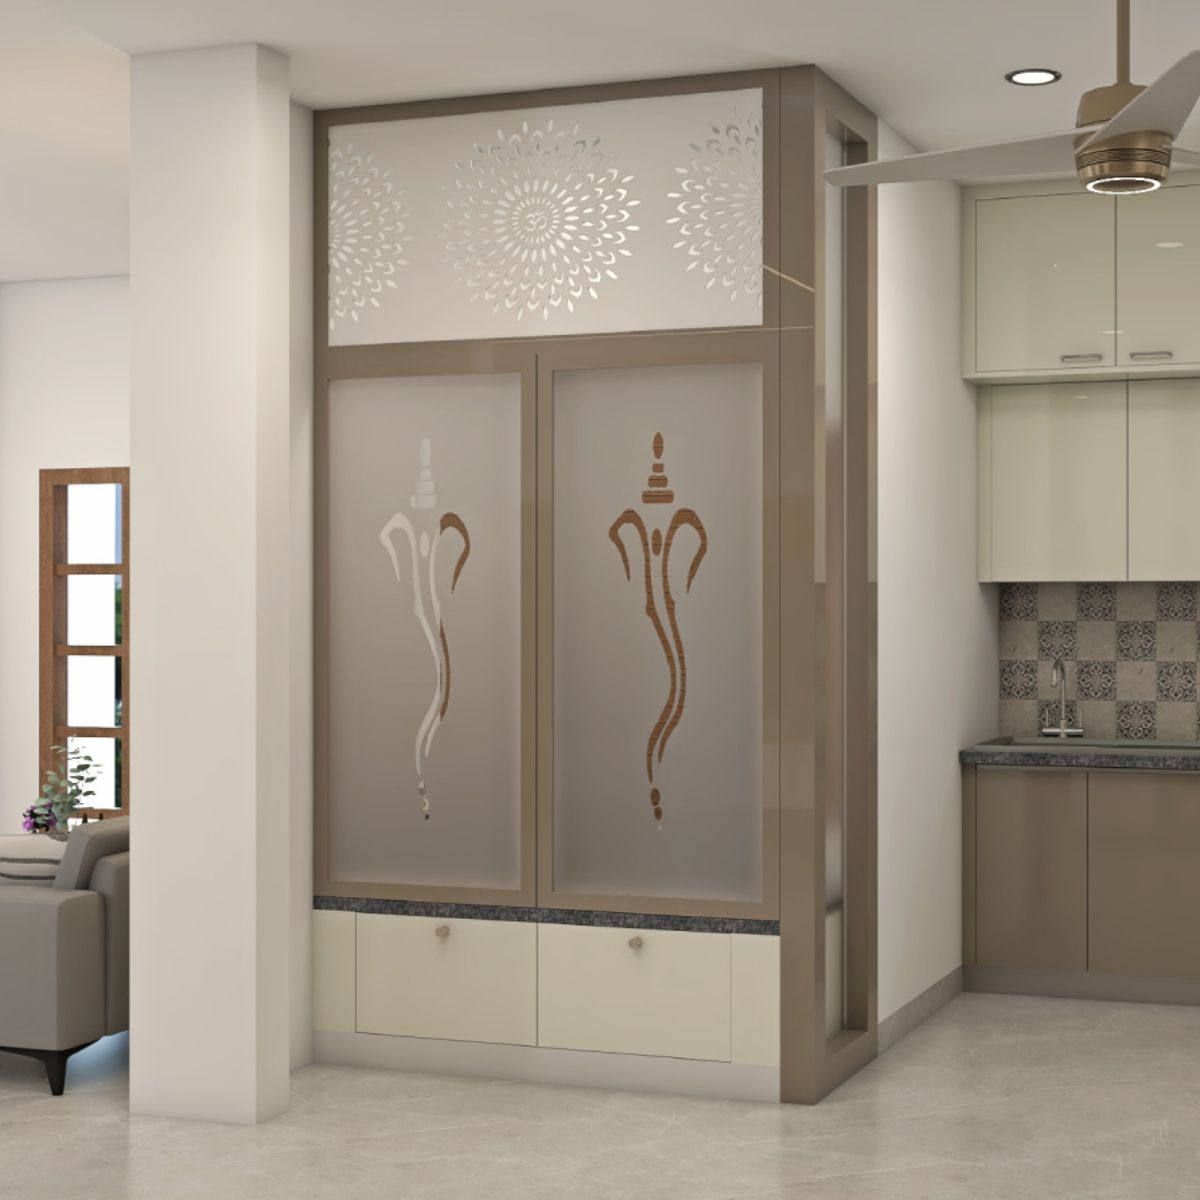 Modern Pooja Room Design With Ganesh Design | Livspace